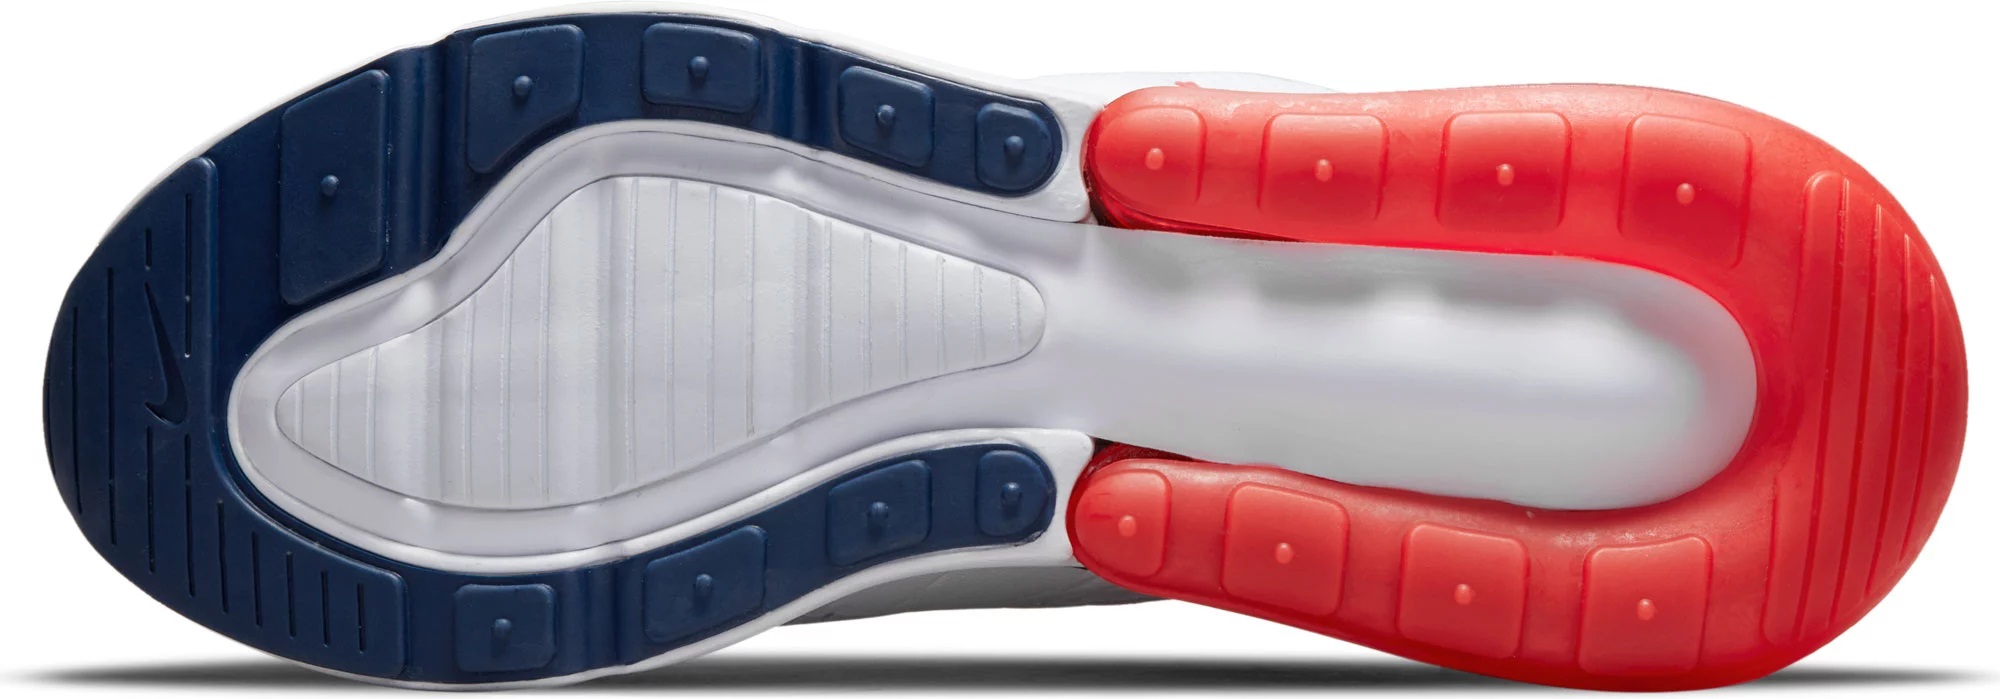 Nike Men's Air Max 270, USA Edition, Running Shoe 